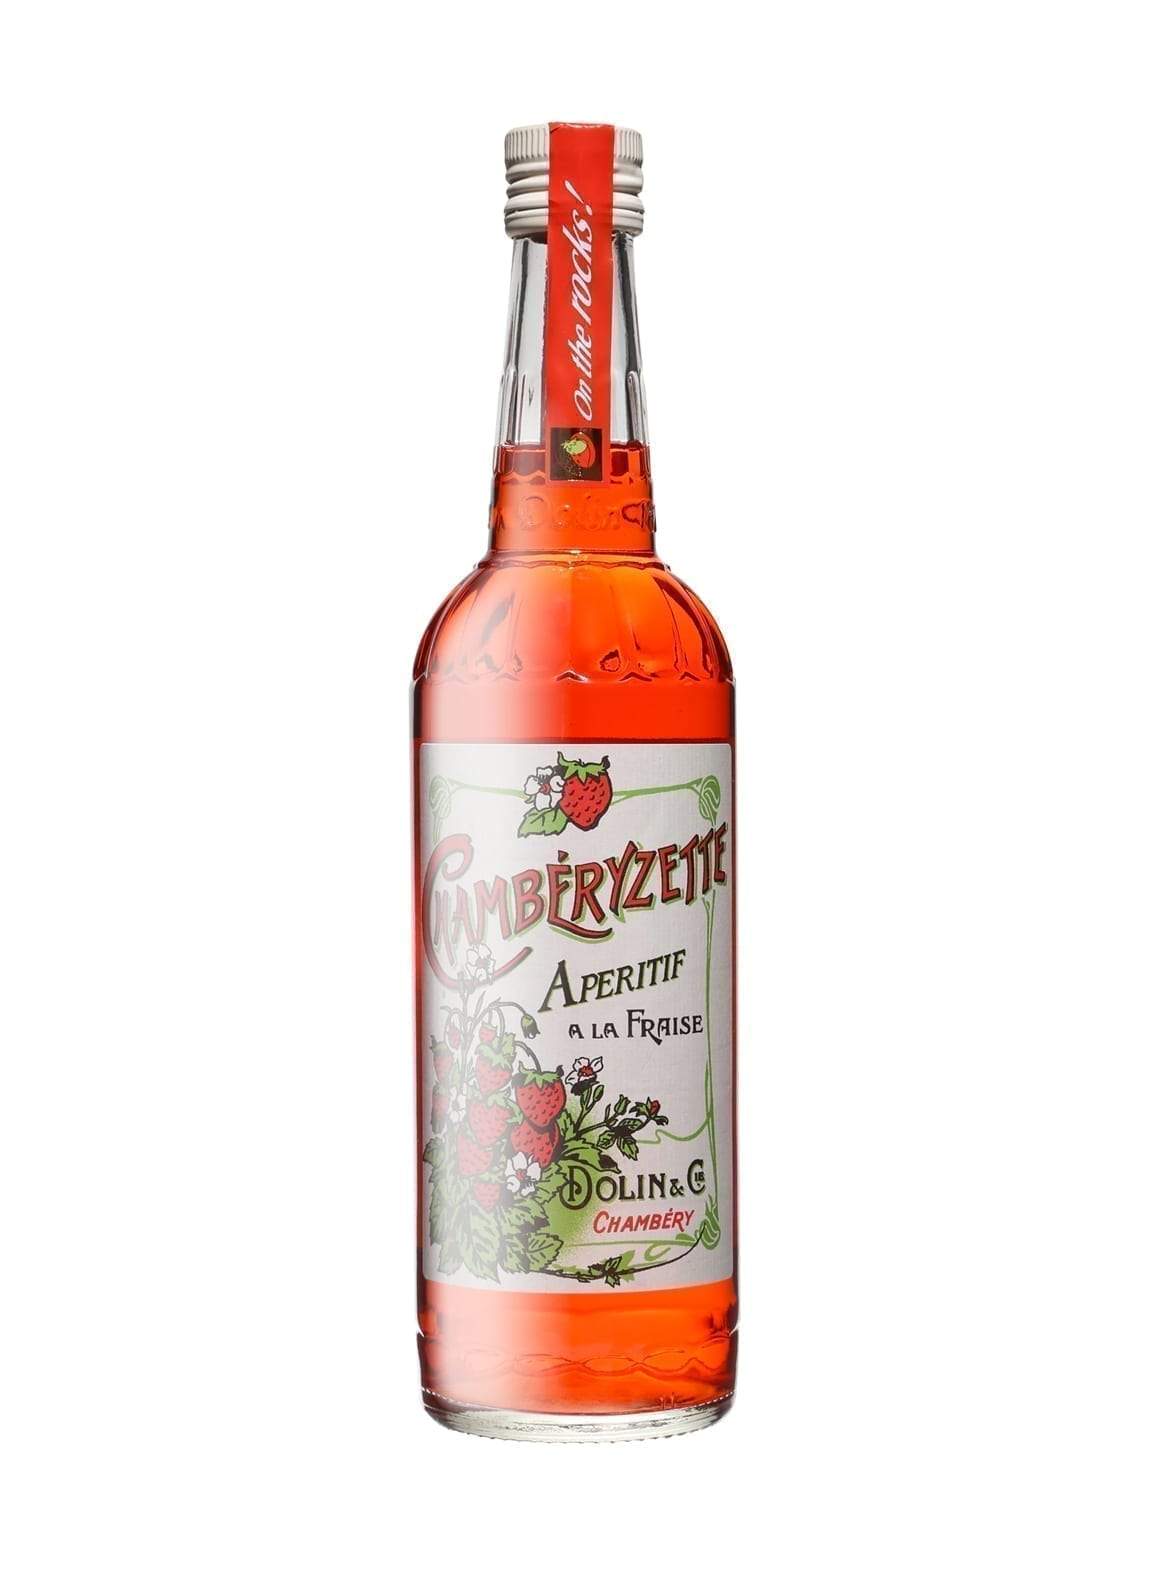 Dolin Aperitif a la Fraise 'Chamberyzette' (Strawberry & Vermouth Dry) 16% 700ml | Liquor & Spirits | Shop online at Spirits of France